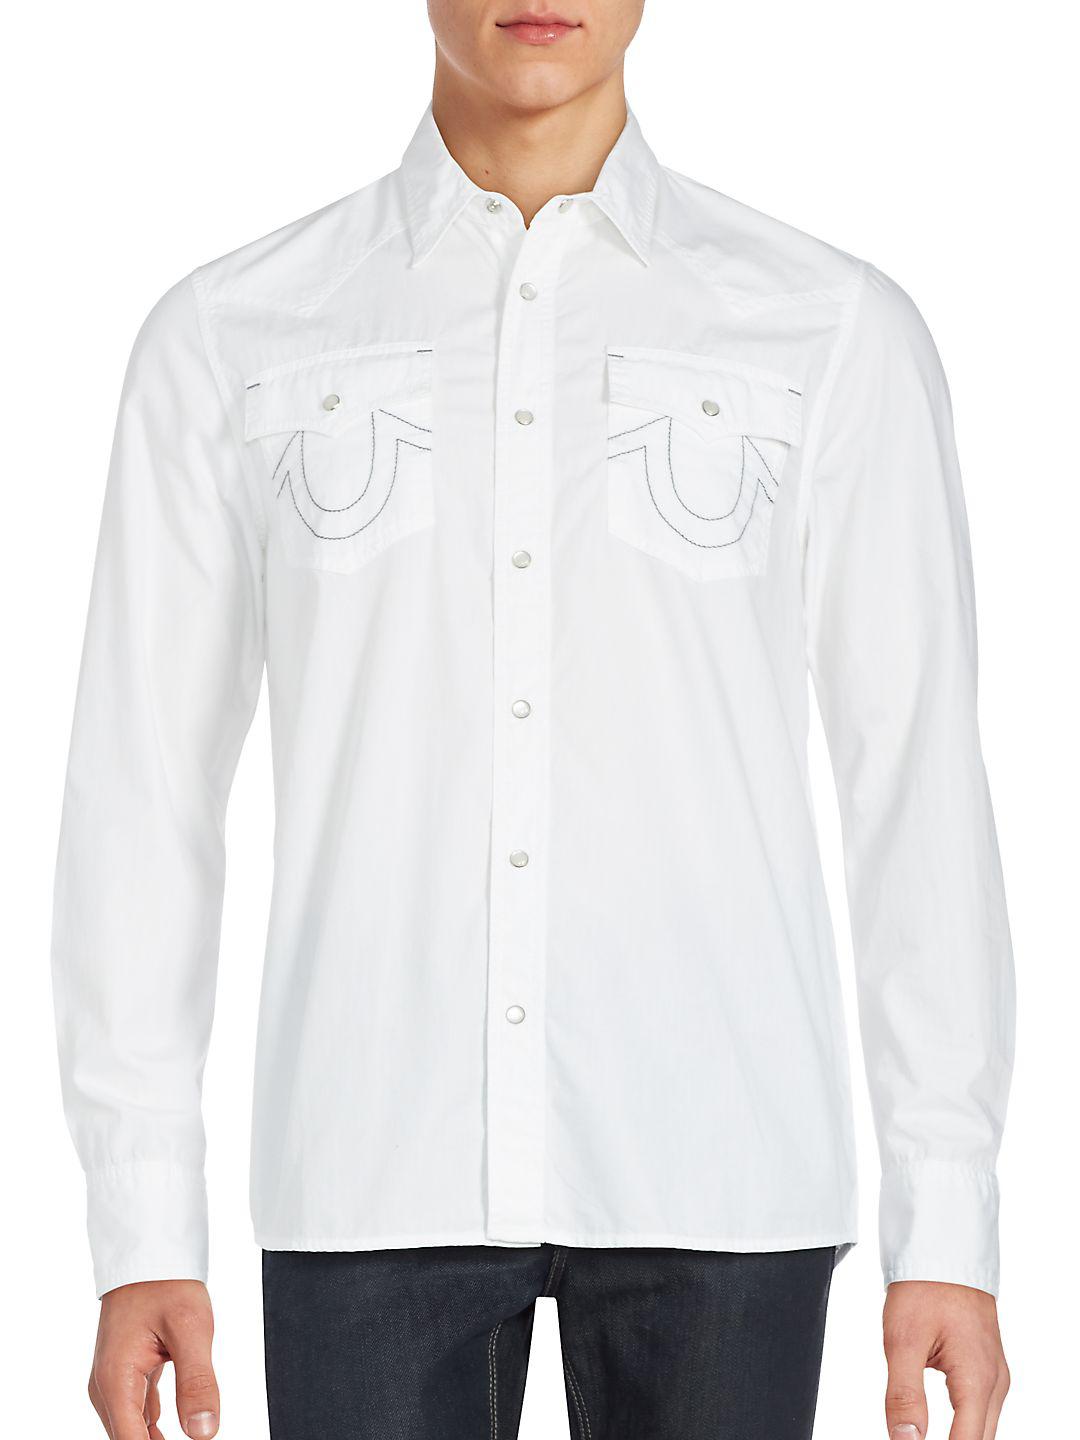 true religion white button up shirt